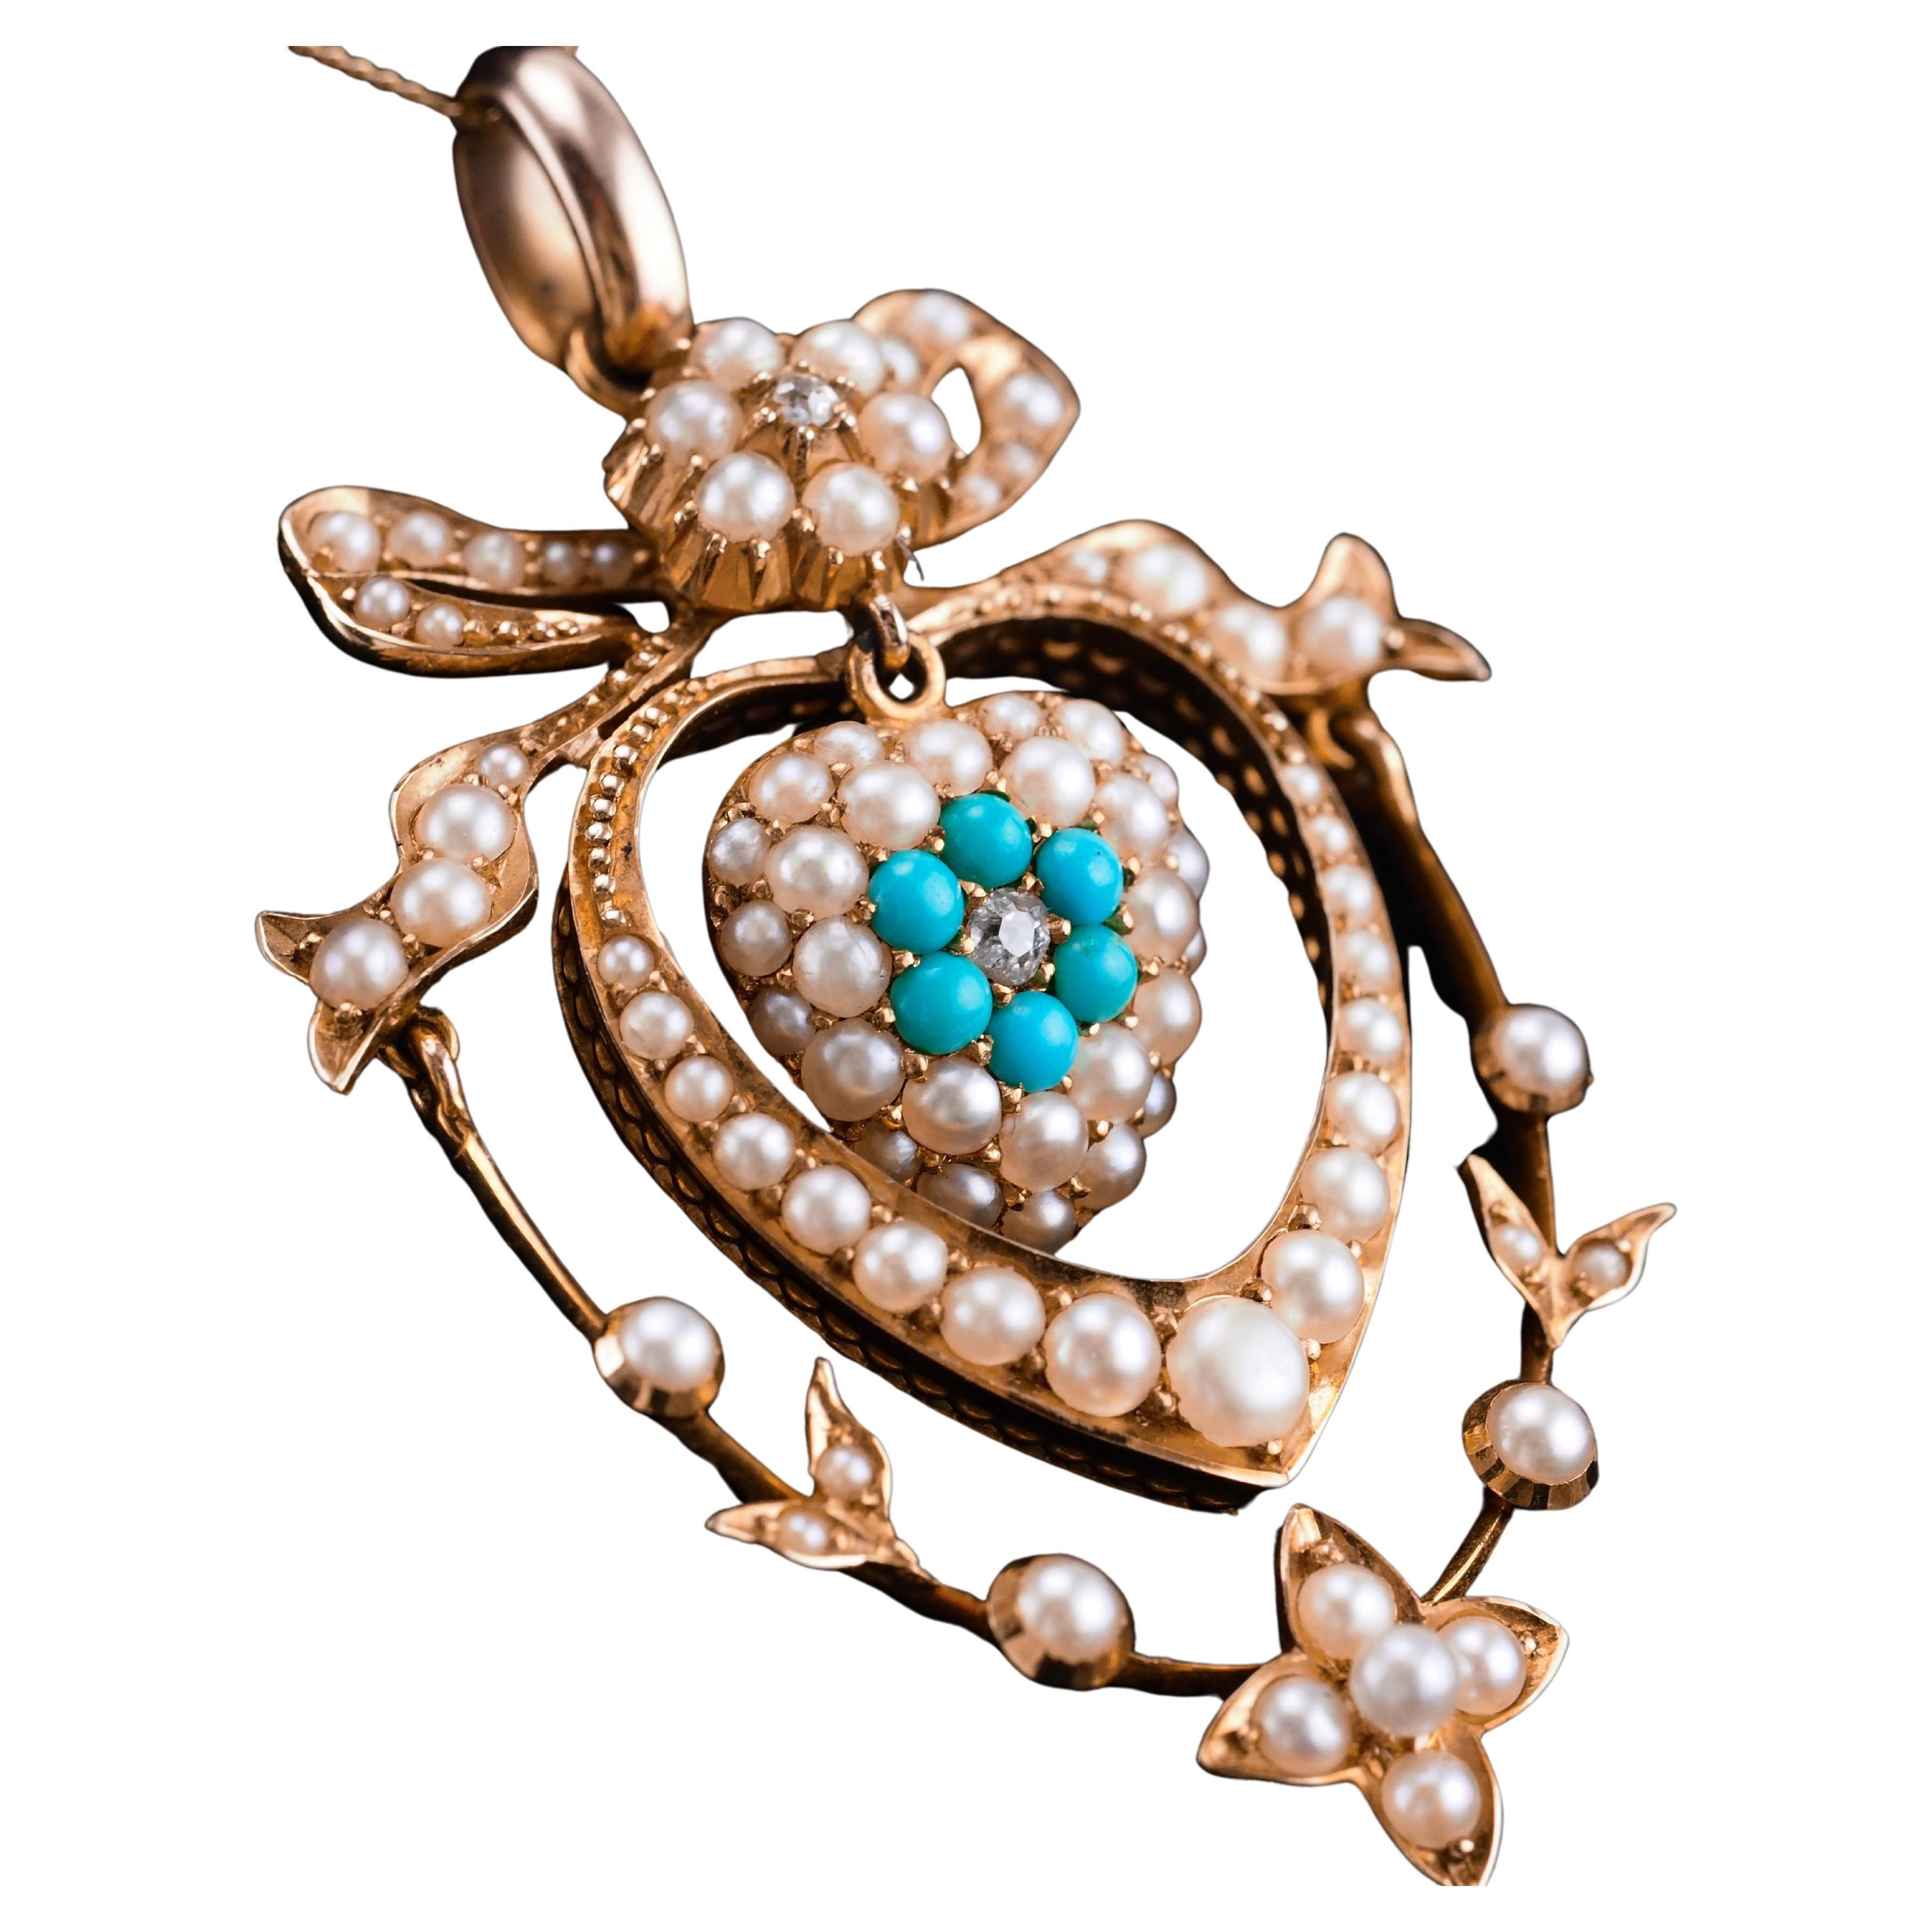 Antique Edwardian 15K Gold Turquoise Diamond & Seed Pearl Pendant Necklace c1910